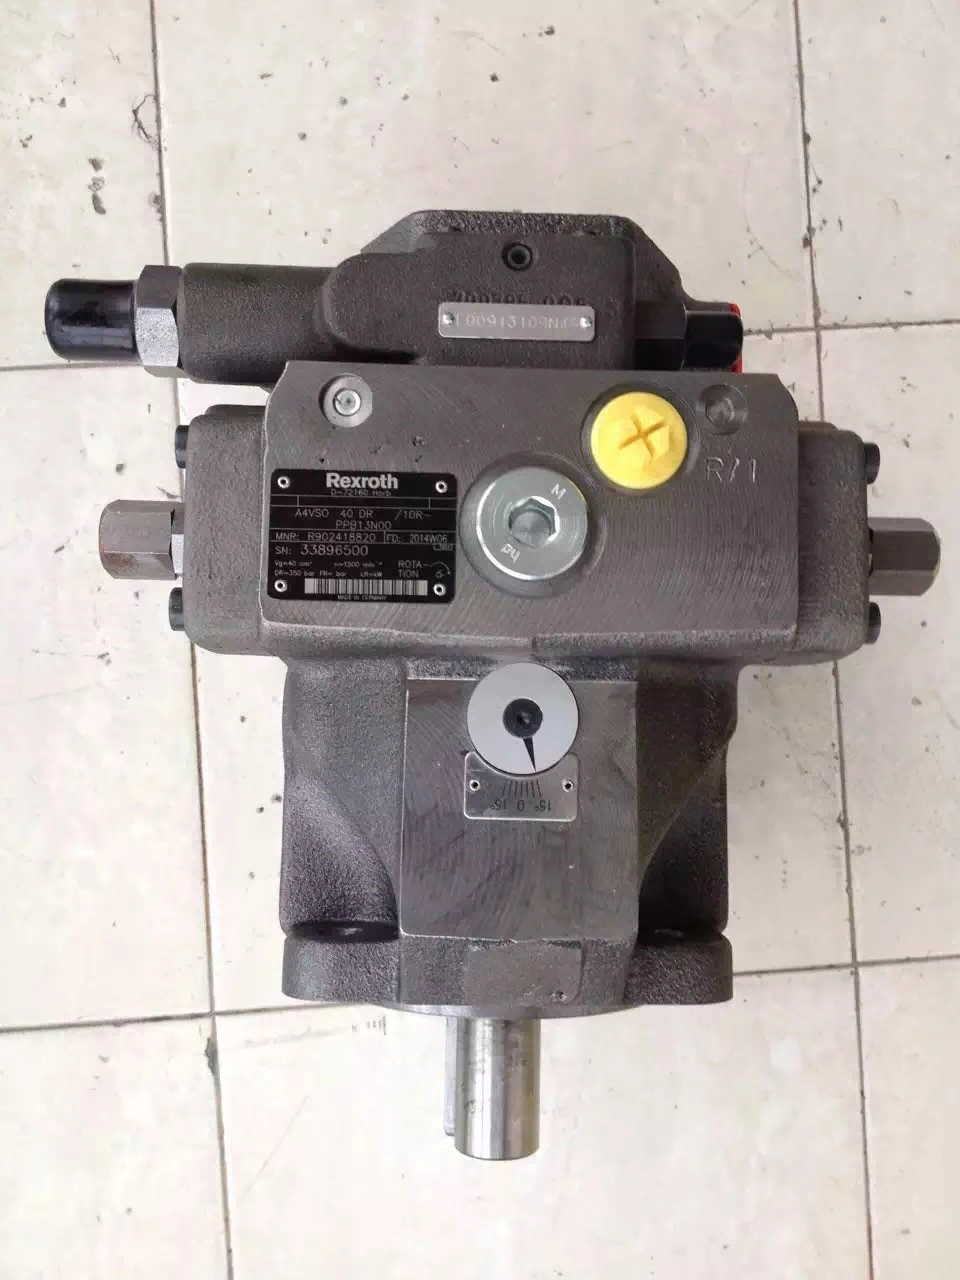 Rexroth Hydraulic Pump/Piston Pump/Pressure Pump/Oil Pump/Vane Pump/ Gear Pump/Excavator Pump for A2fo/A2FM/A4V/A6vm/A7vo/A10vso/A11V/PV7/Pg/A4fo